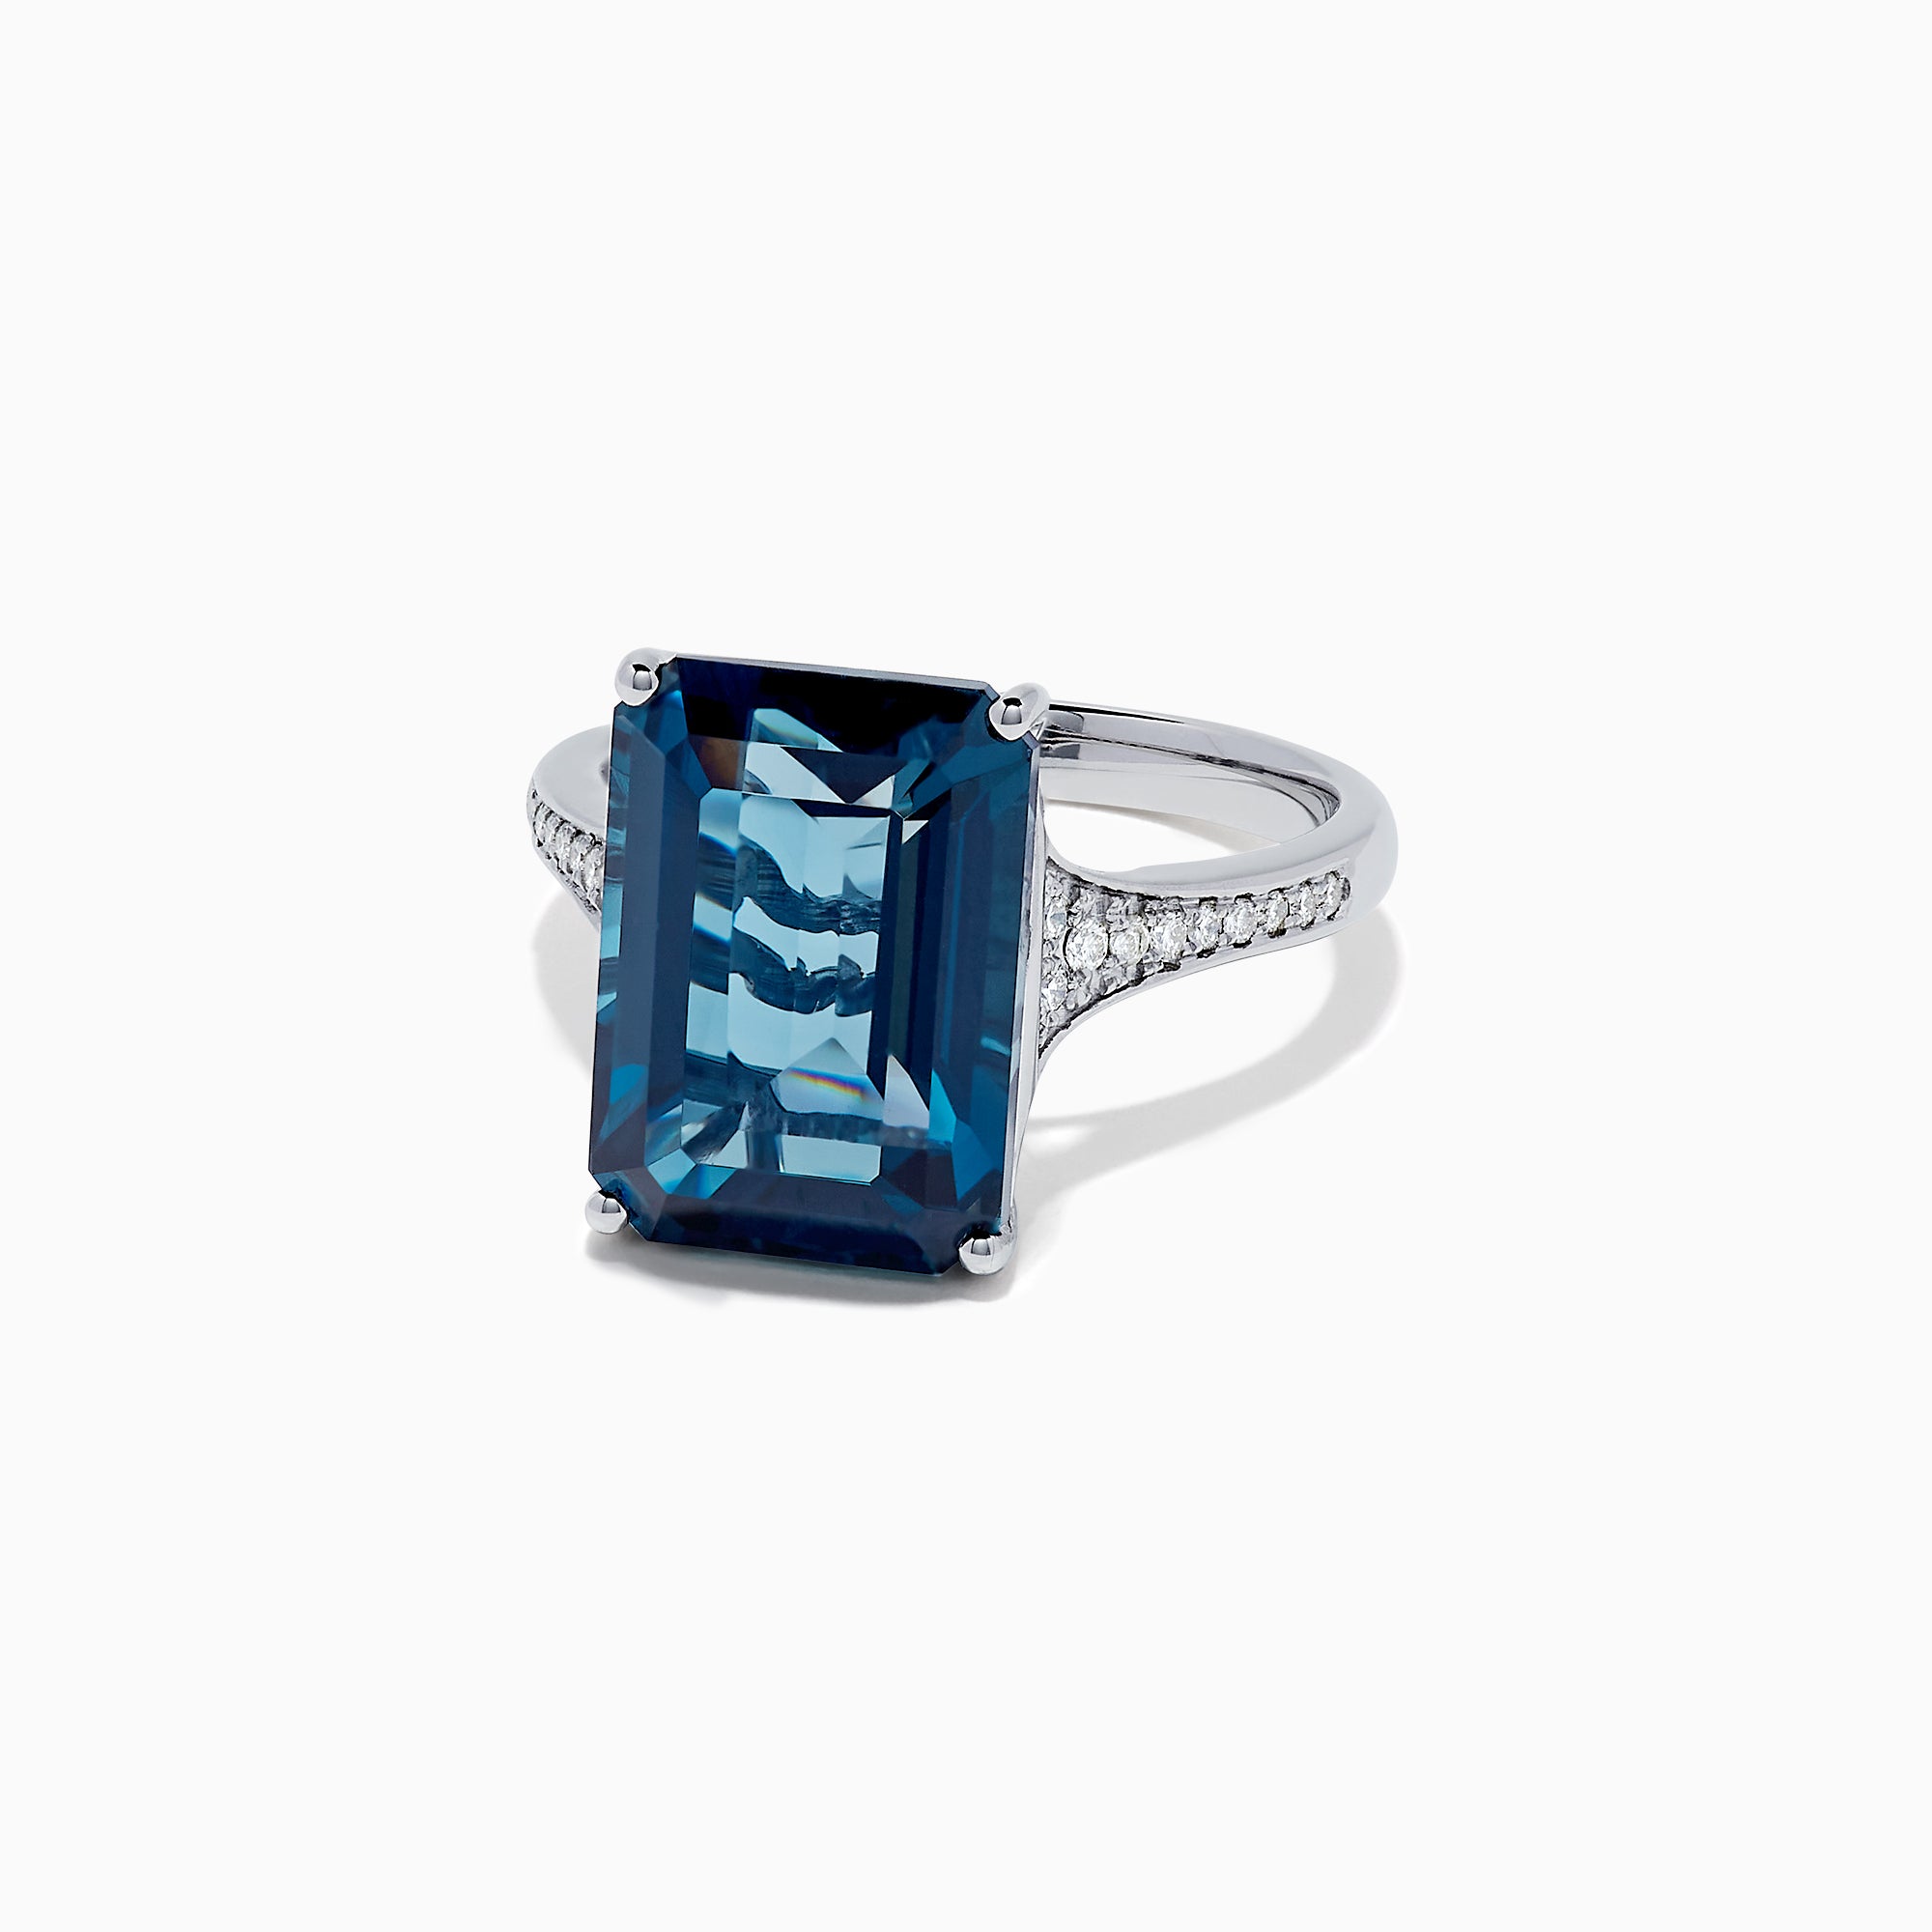 Effy Ocean Bleu 14K White Gold London Blue Topaz and Diamond Ring, 8.98 TCW